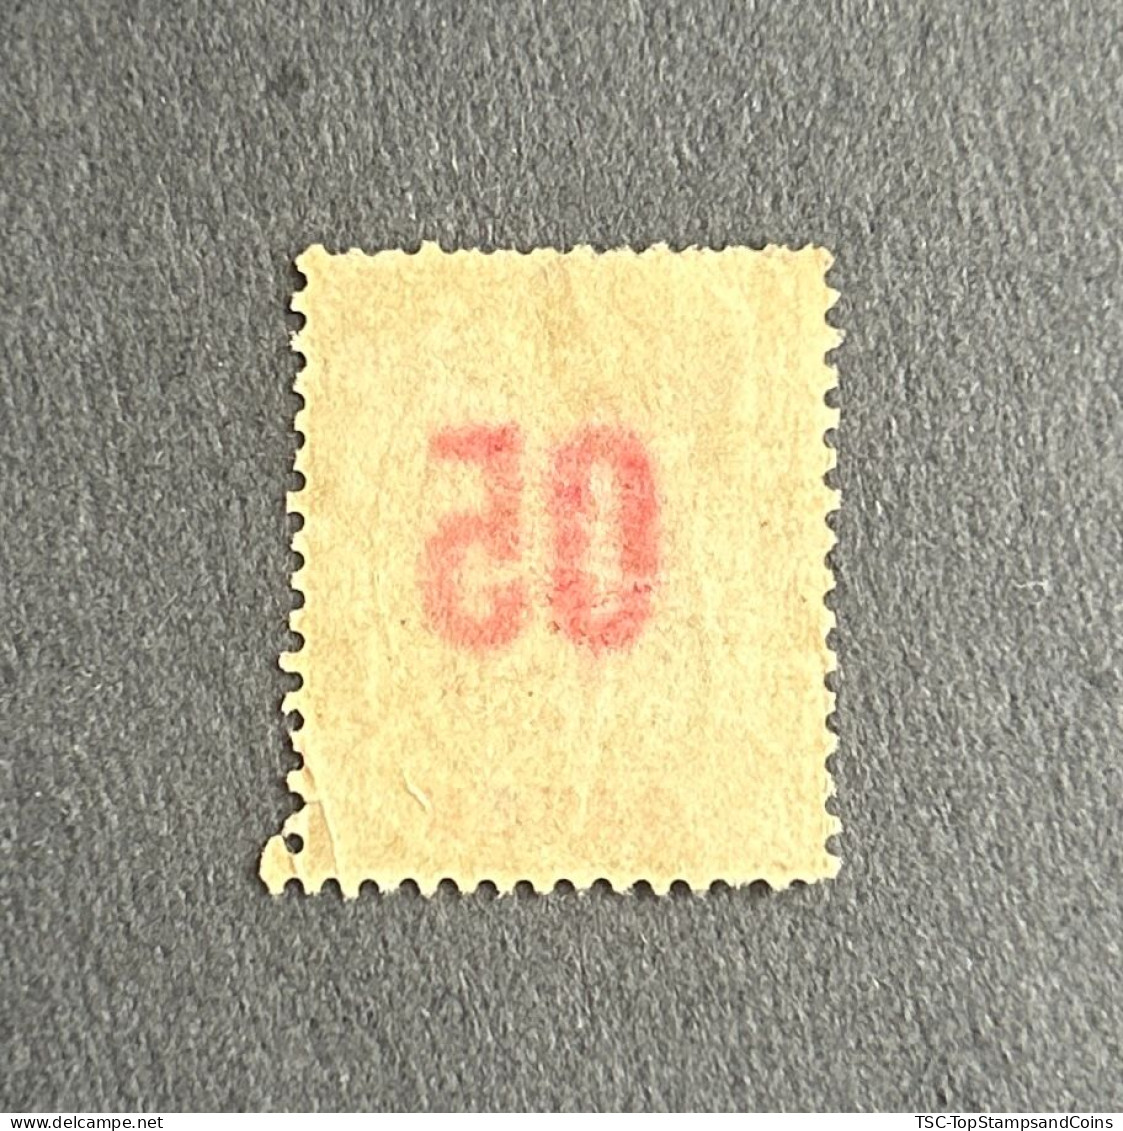 FRAGA0068U2 - Mythology - Surcharged 5 C Over 15 C Used Stamp - Gabon - 1912 - Used Stamps